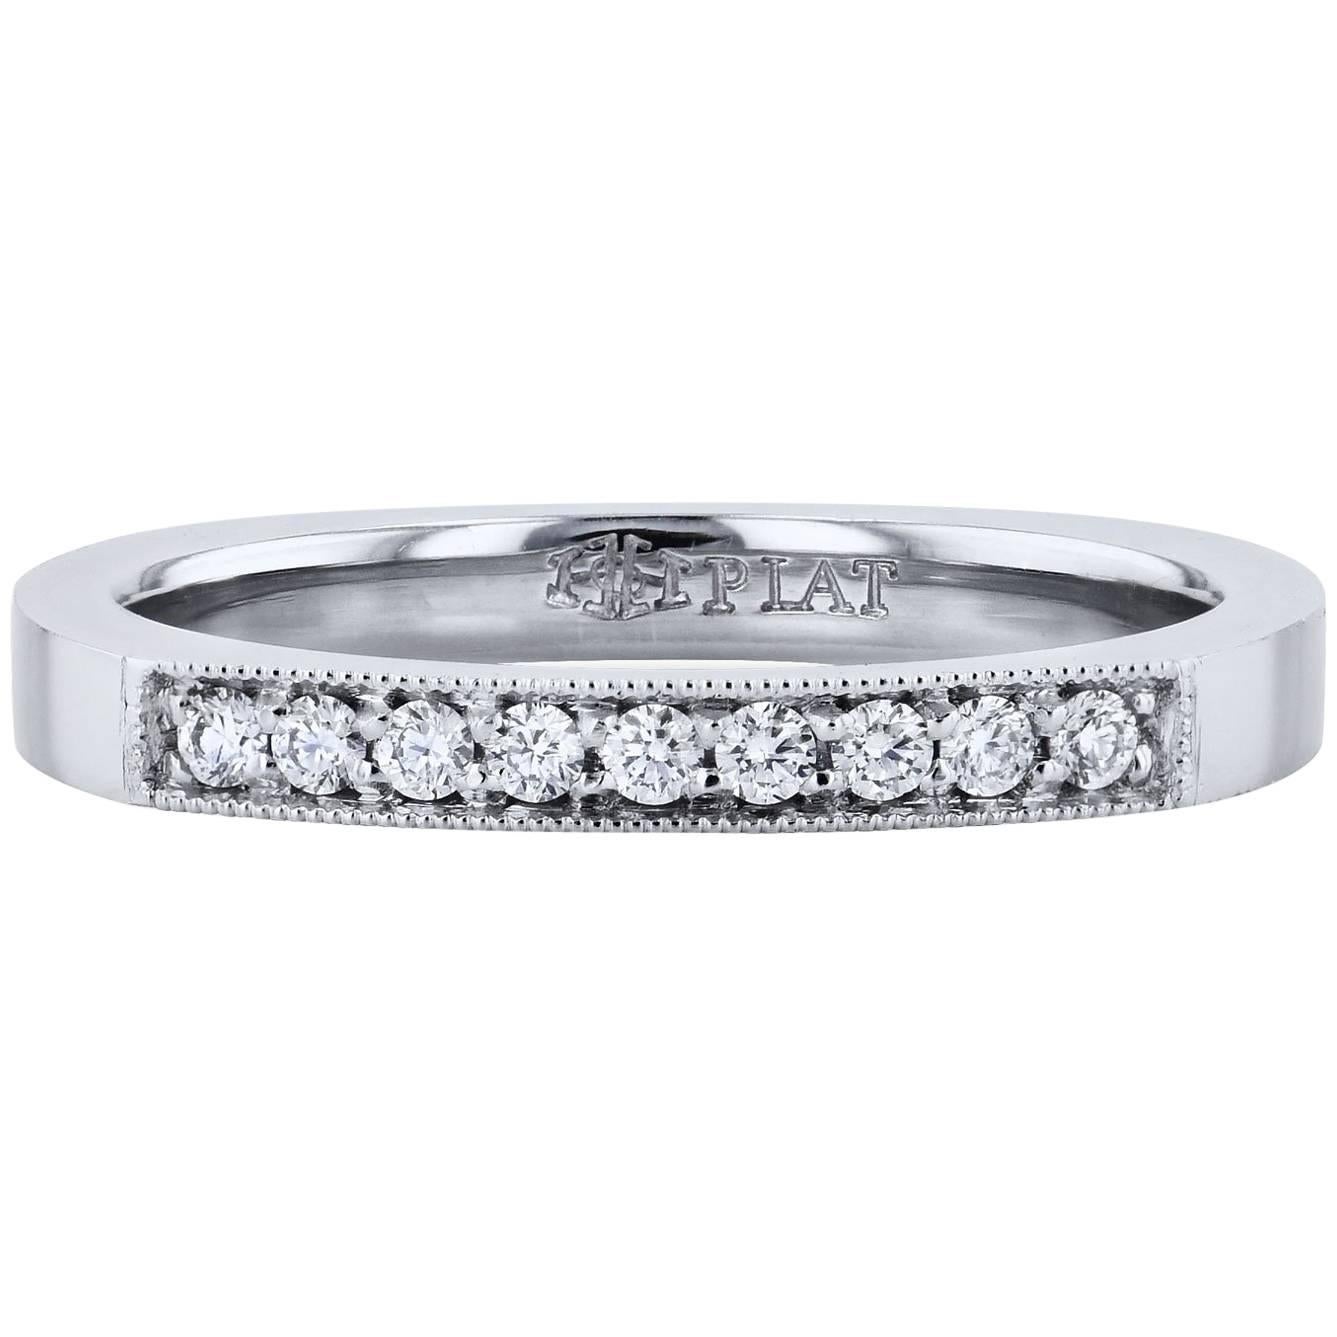 H&H 0.10 Carat Diamond Band Ring in Platinum